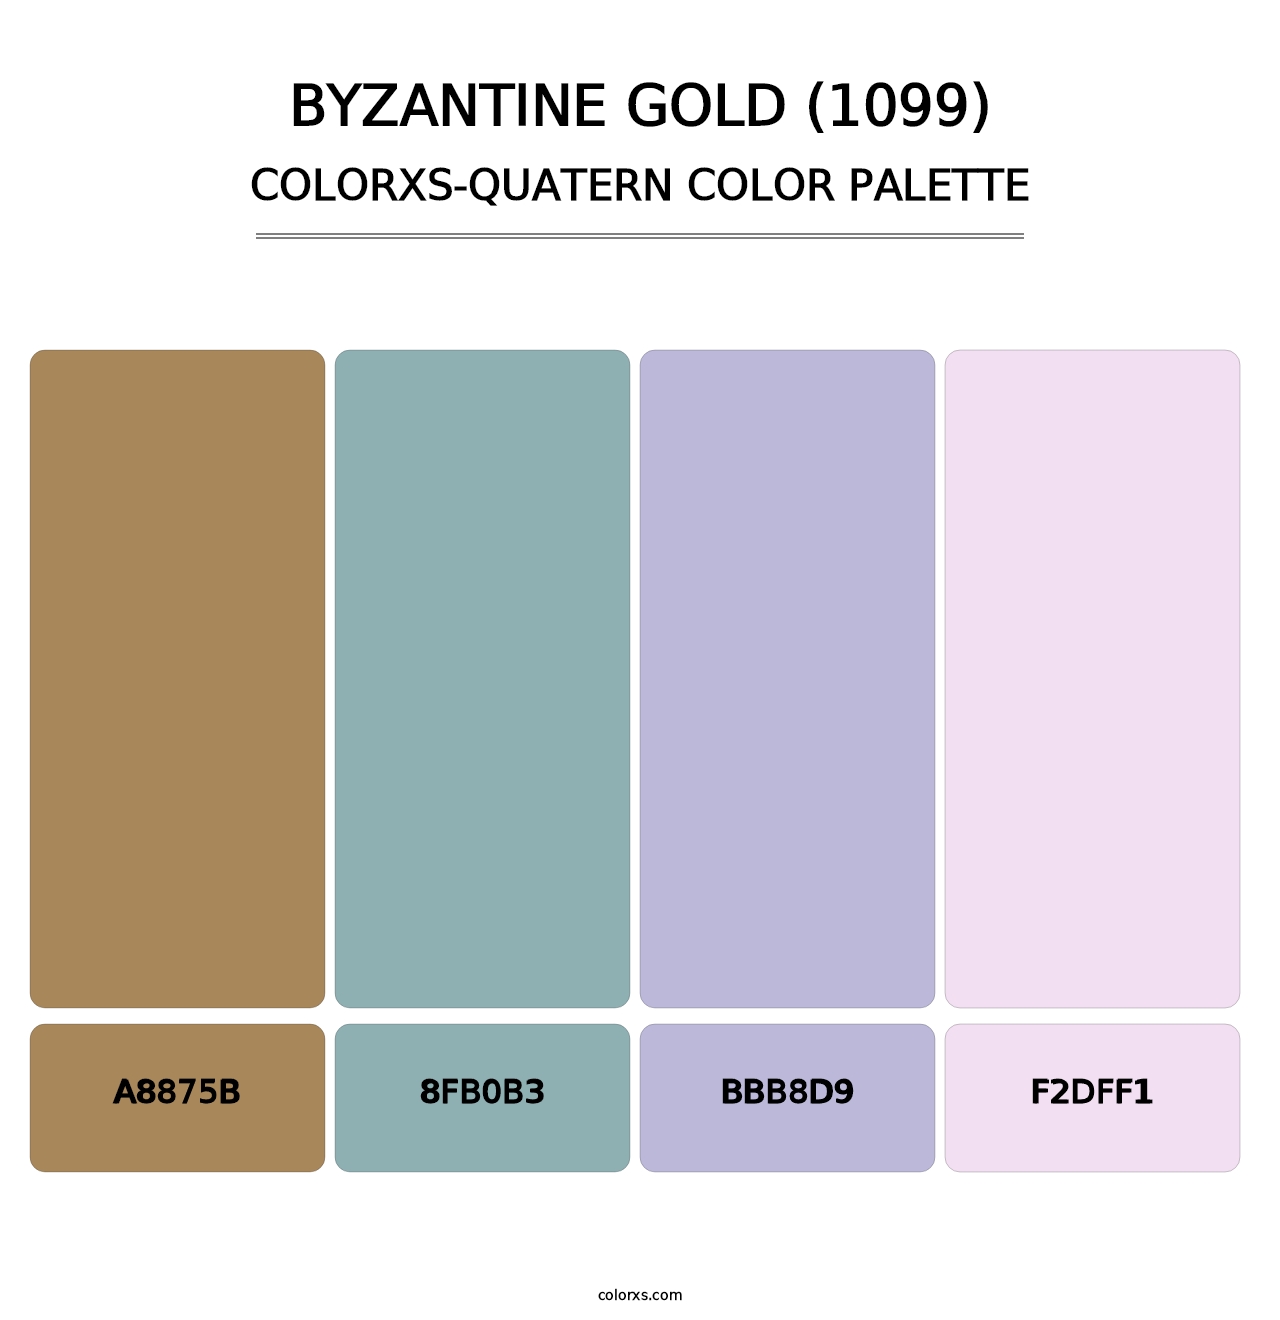 Byzantine Gold (1099) - Colorxs Quatern Palette